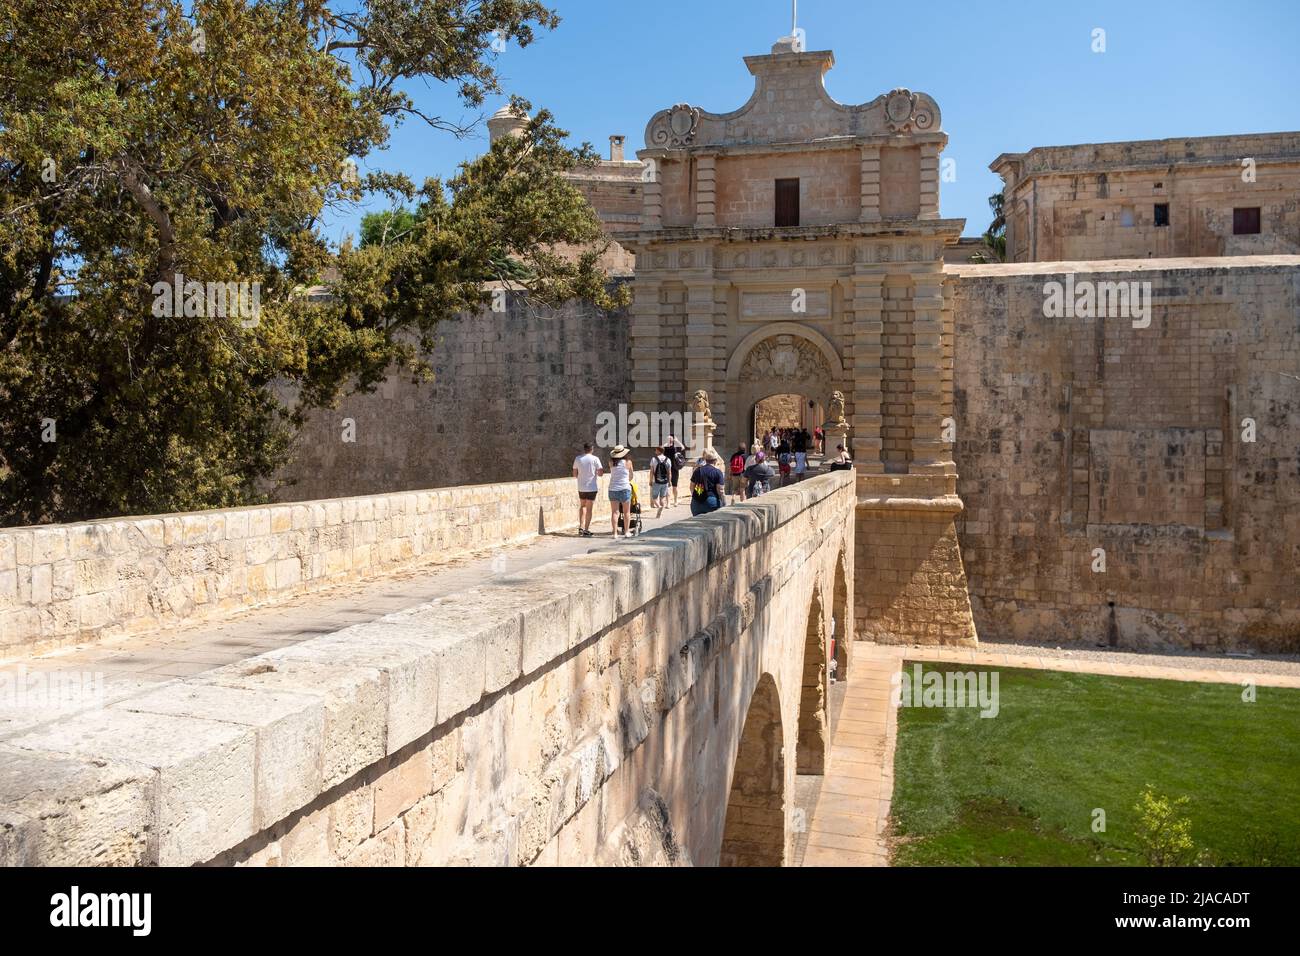 City Gate, Mdina, Malta Foto de stock